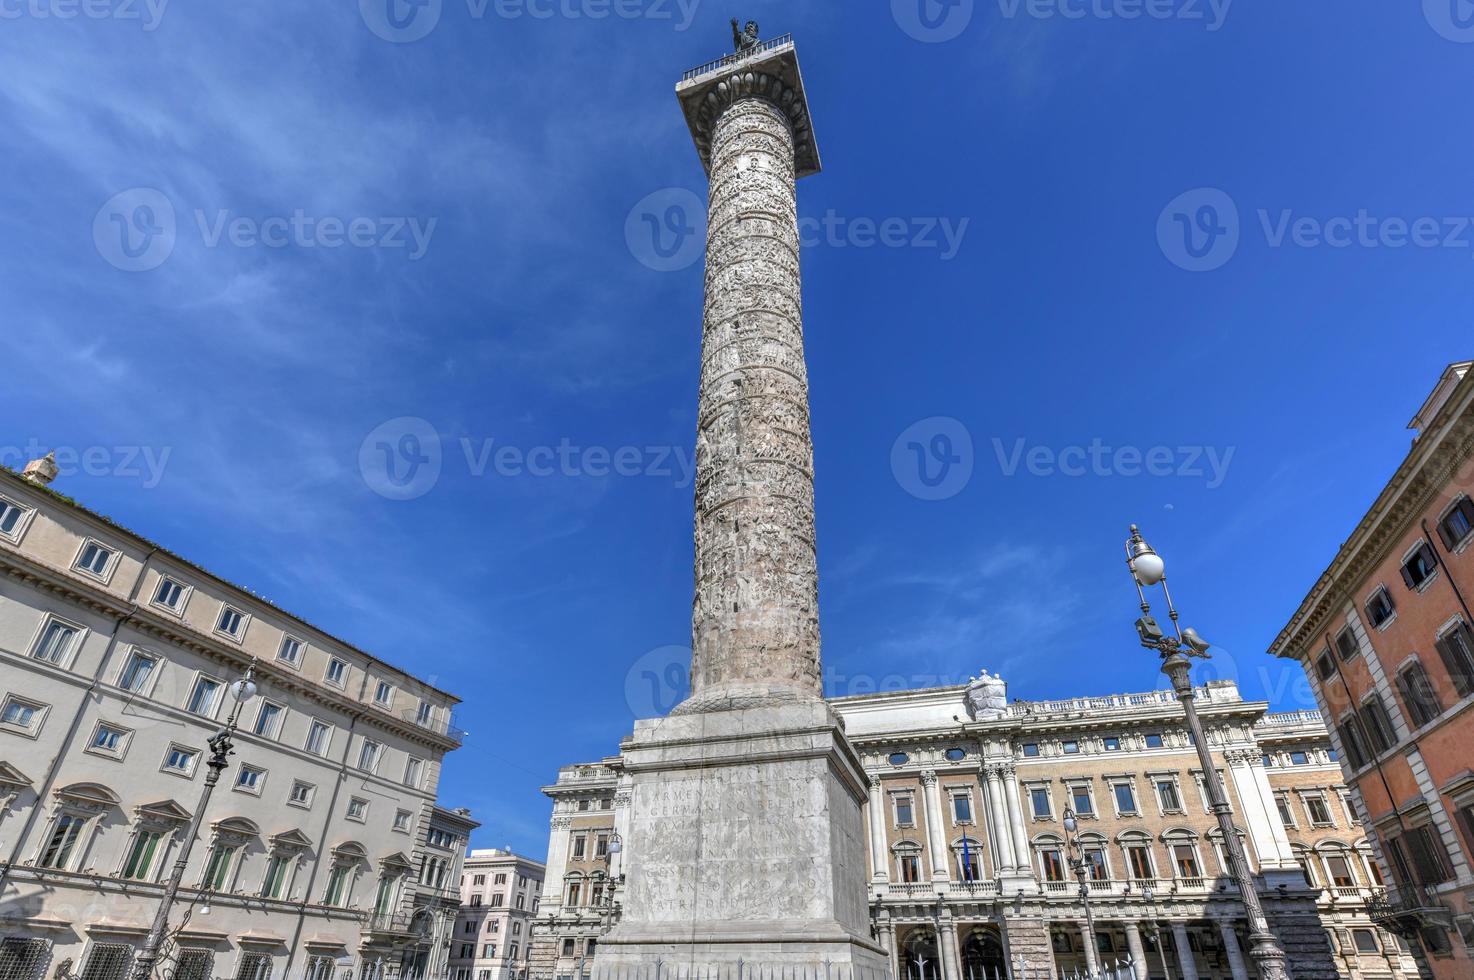 marcus aurelius kolom - Rome, Italië foto